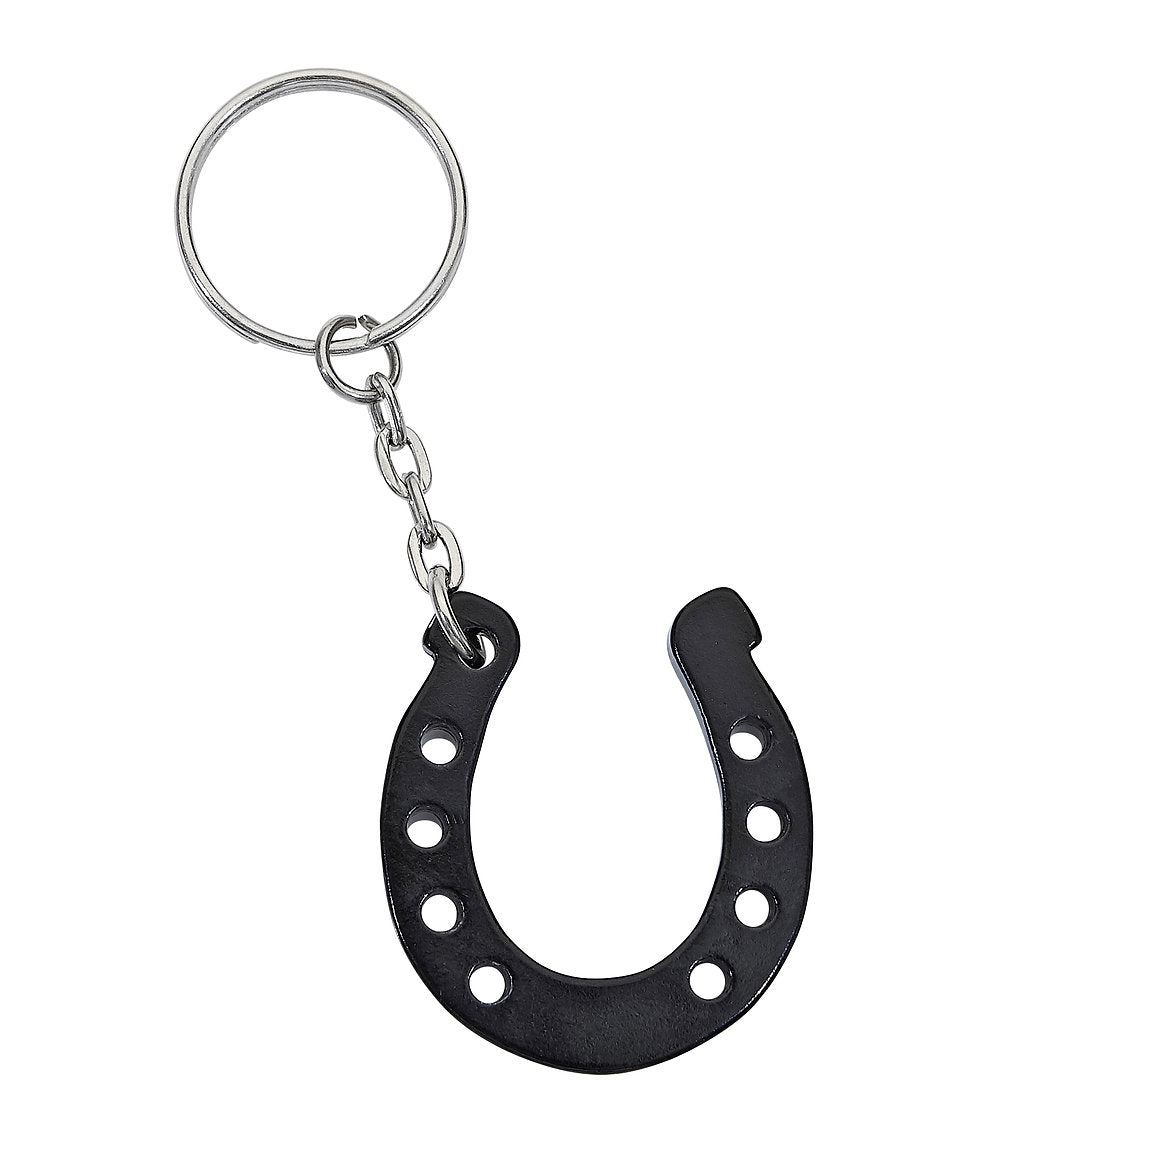 Horseshoe Key Chain - Black